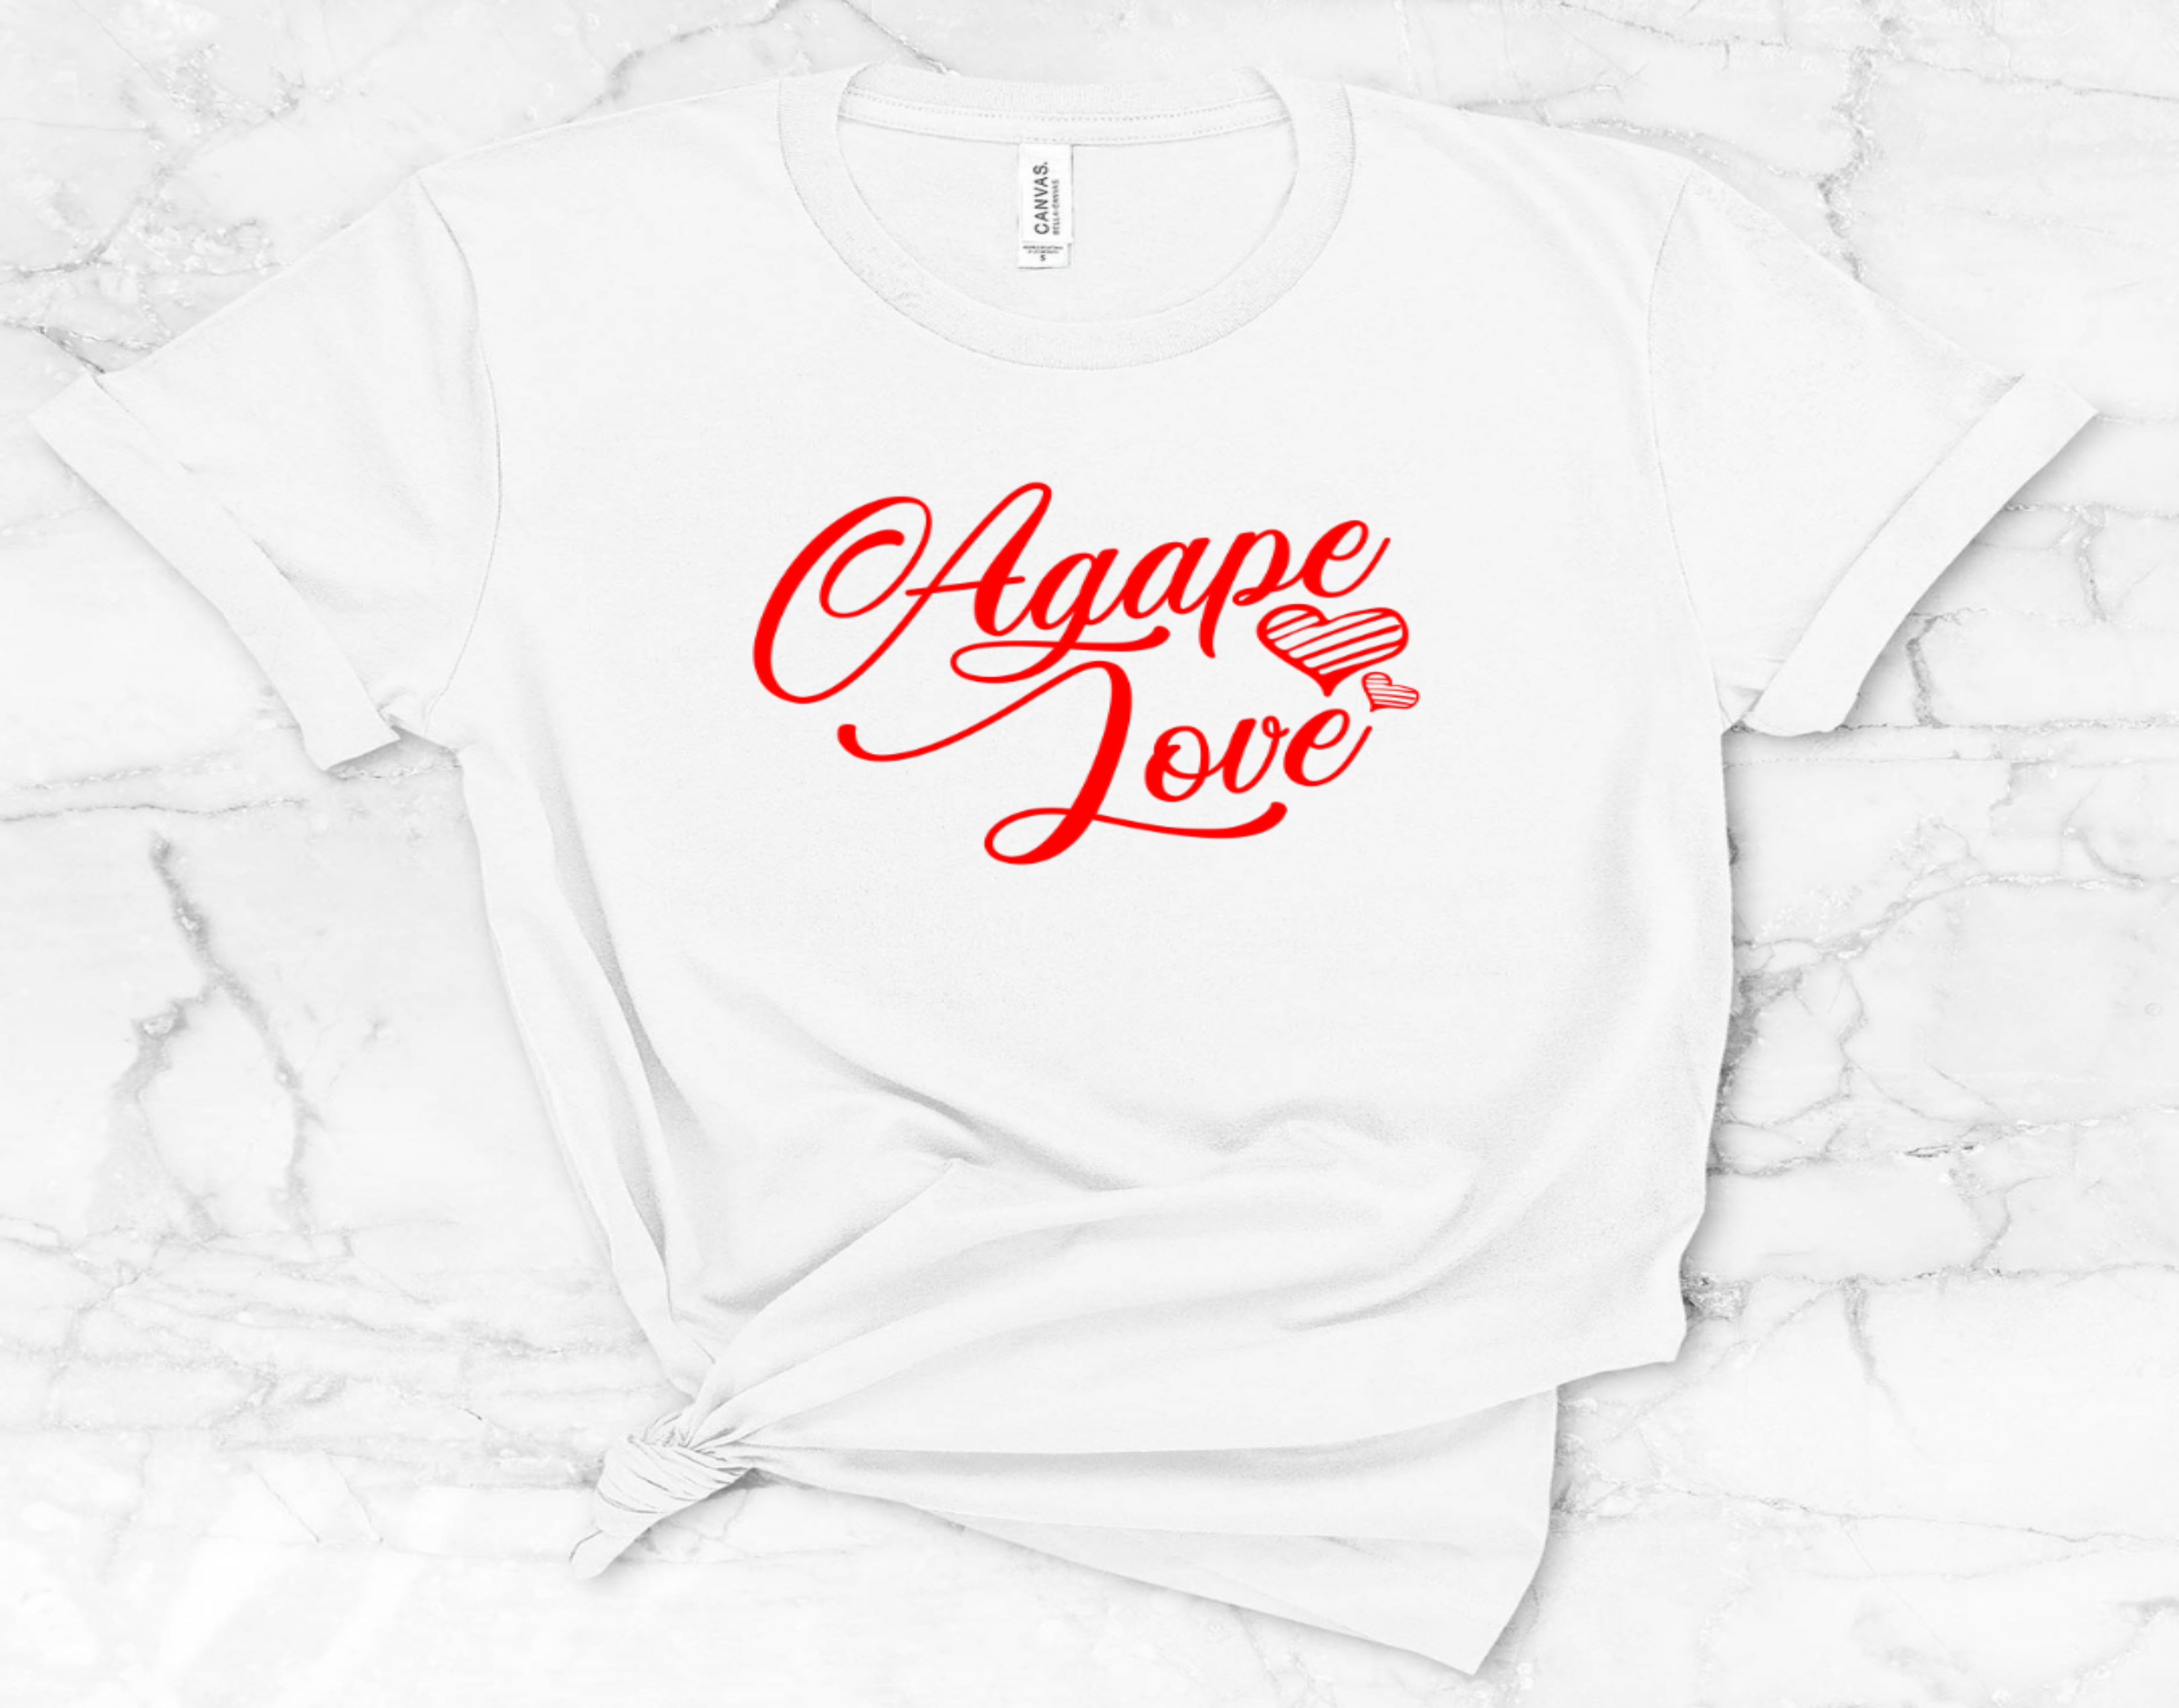 Agape Love Unisex T-shirt